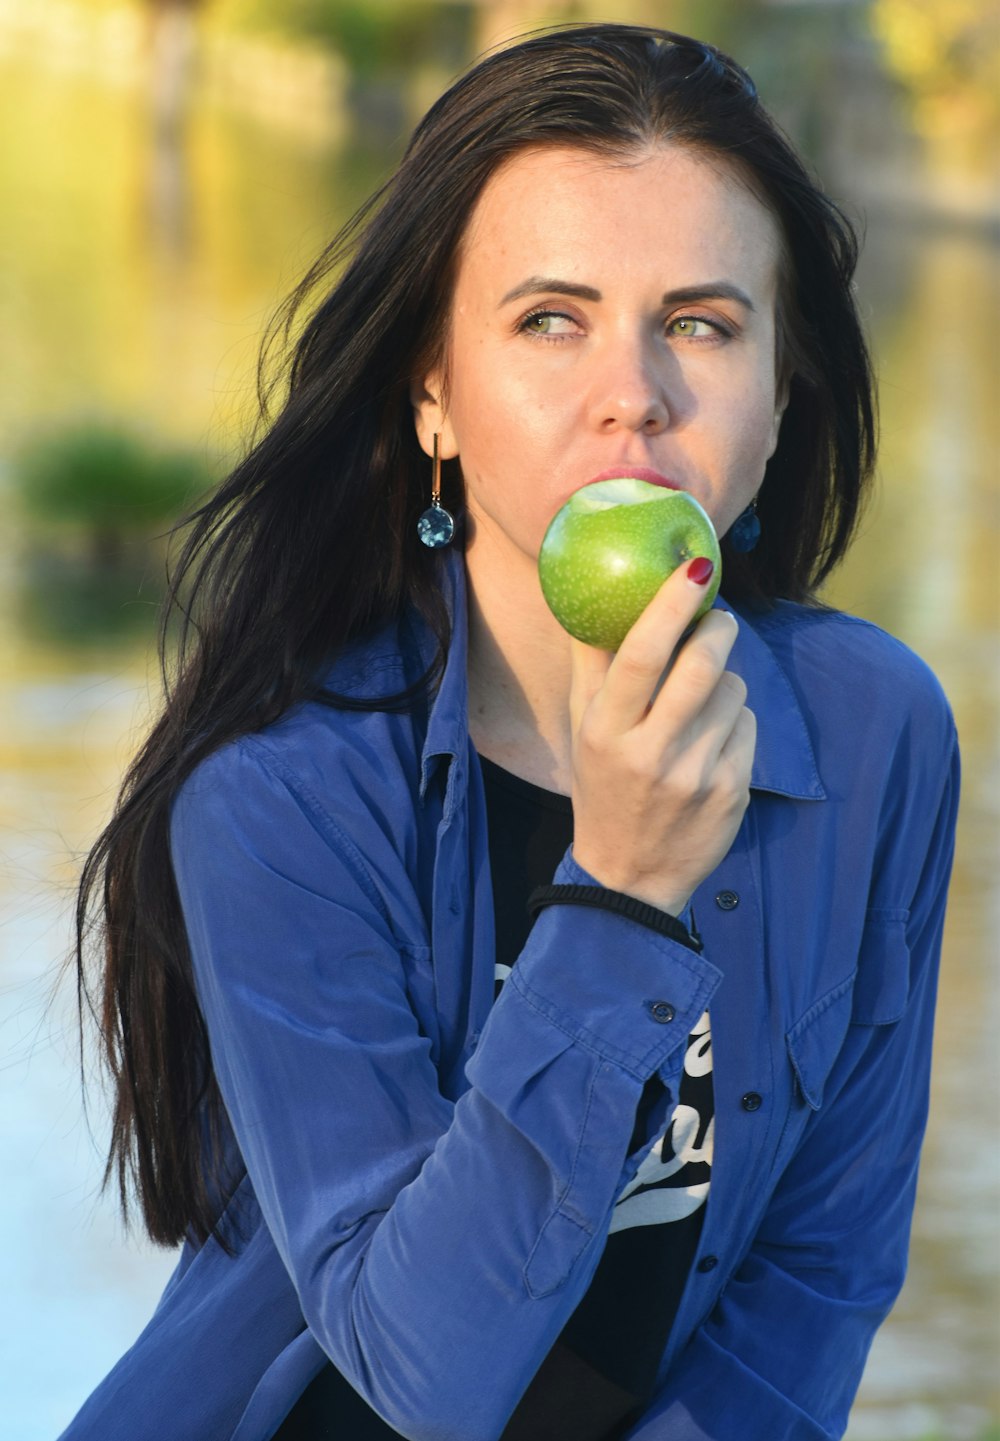 a woman in a blue shirt eating an apple